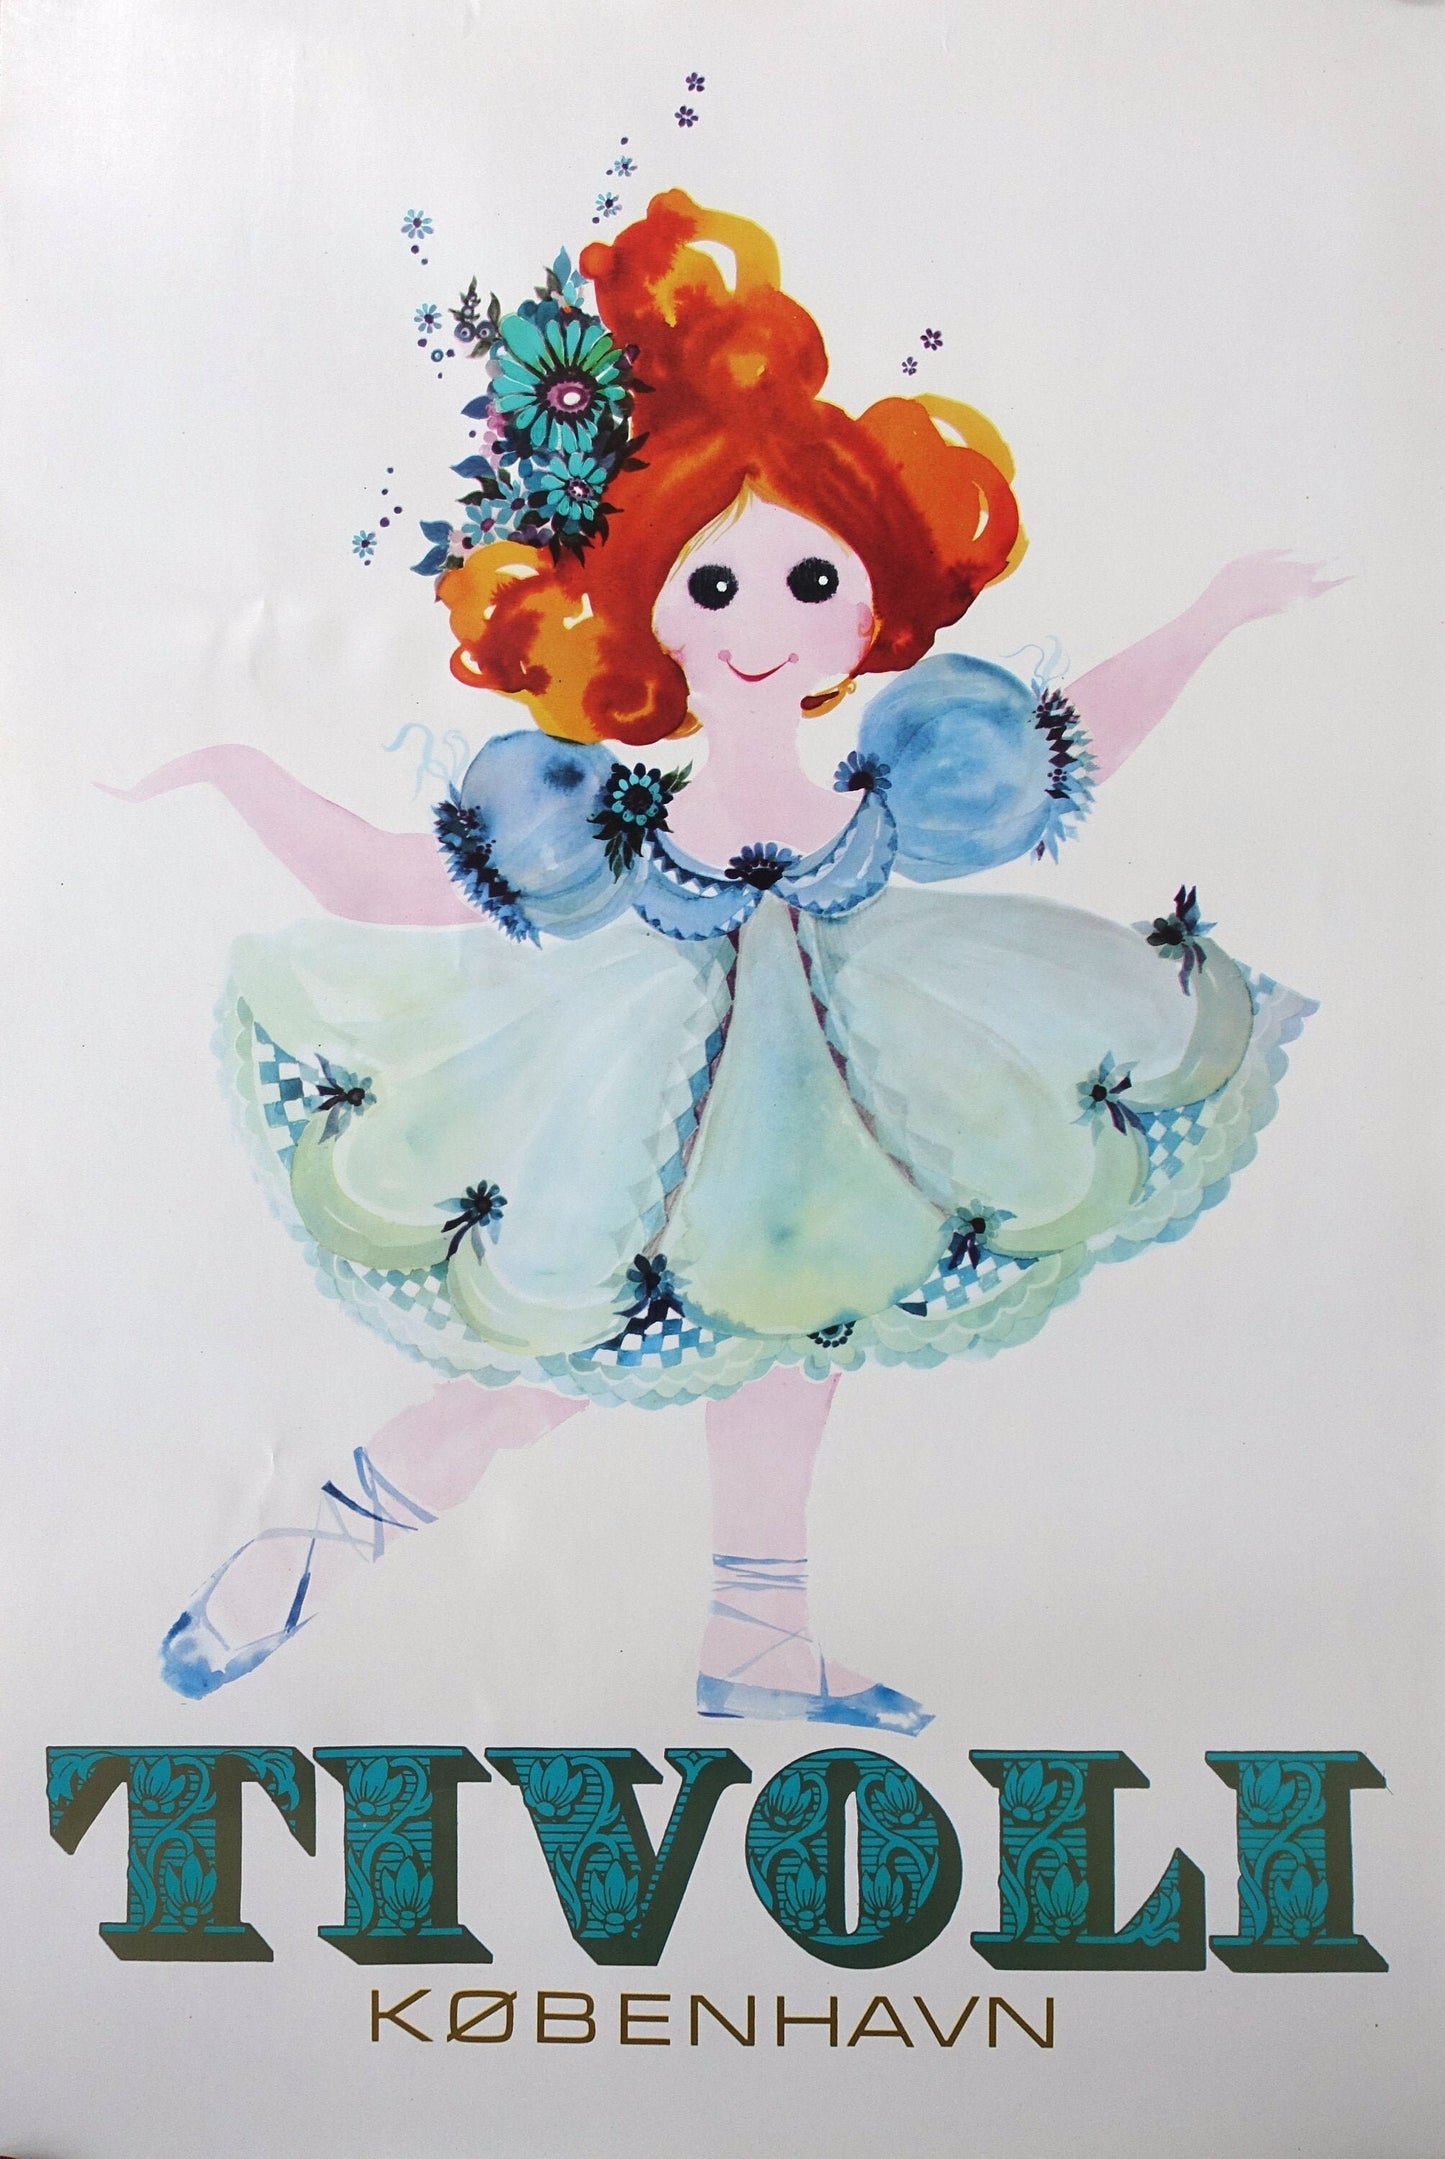 1972 Tivoli Gardens by Richardt Branderup - Original Vintage Poster